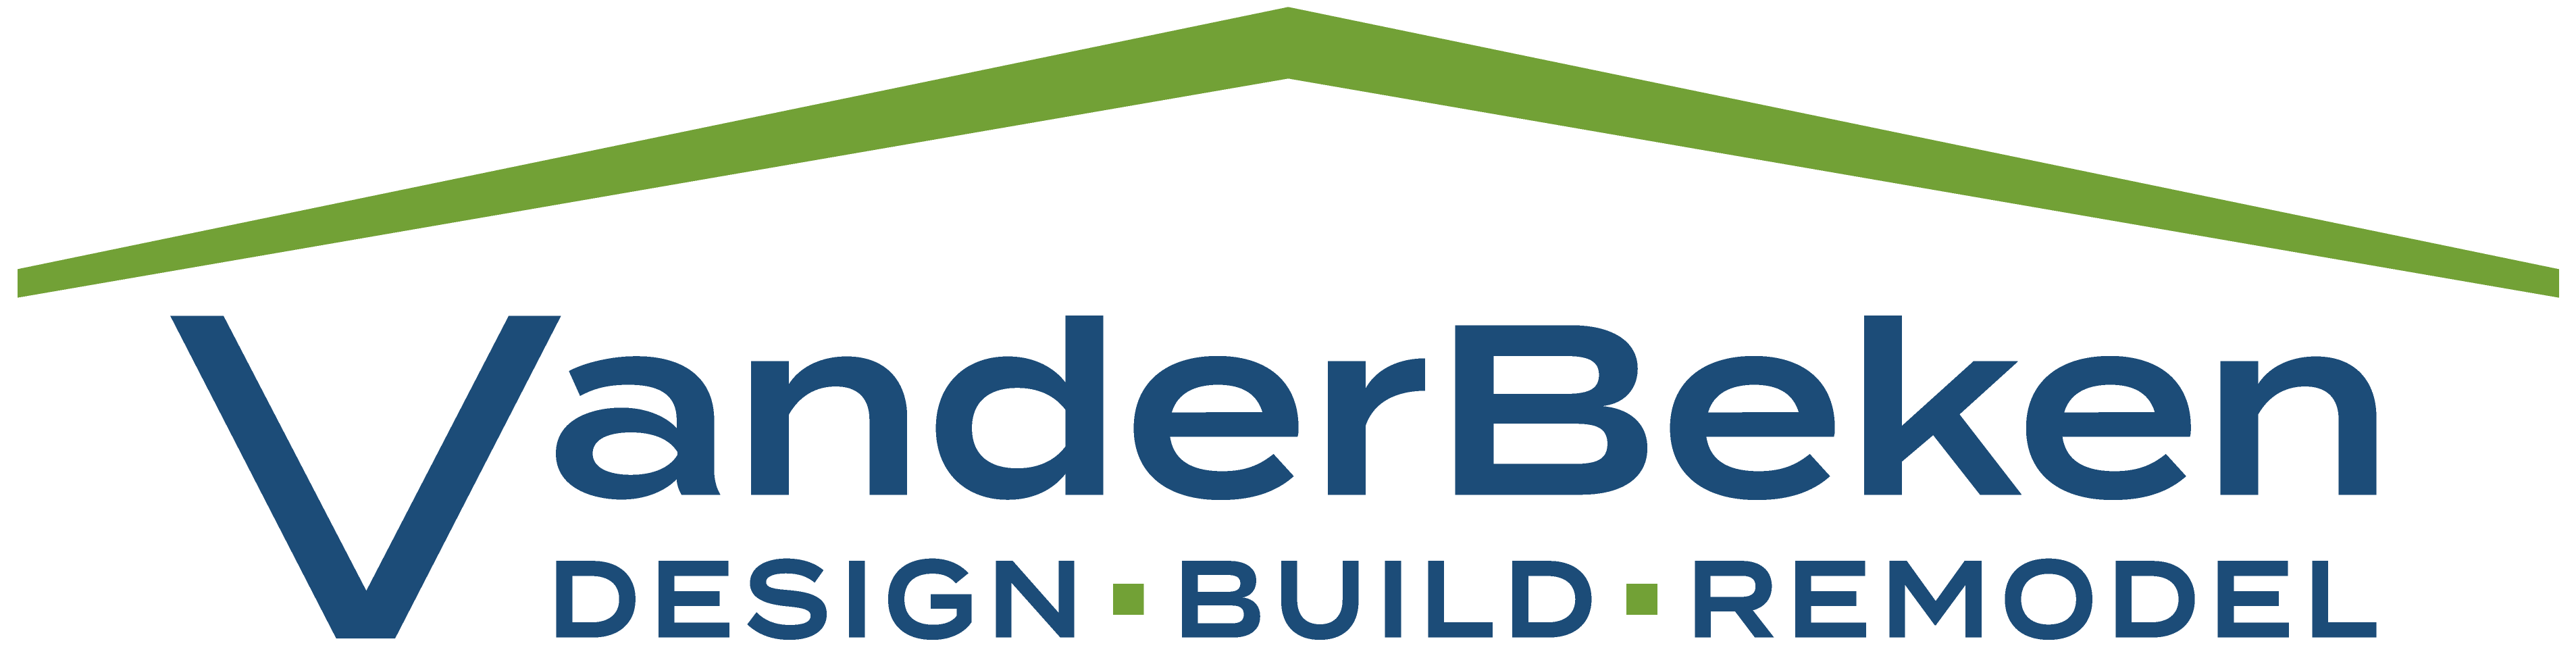 VanderBeken-DBR-logo-RGB-High-1